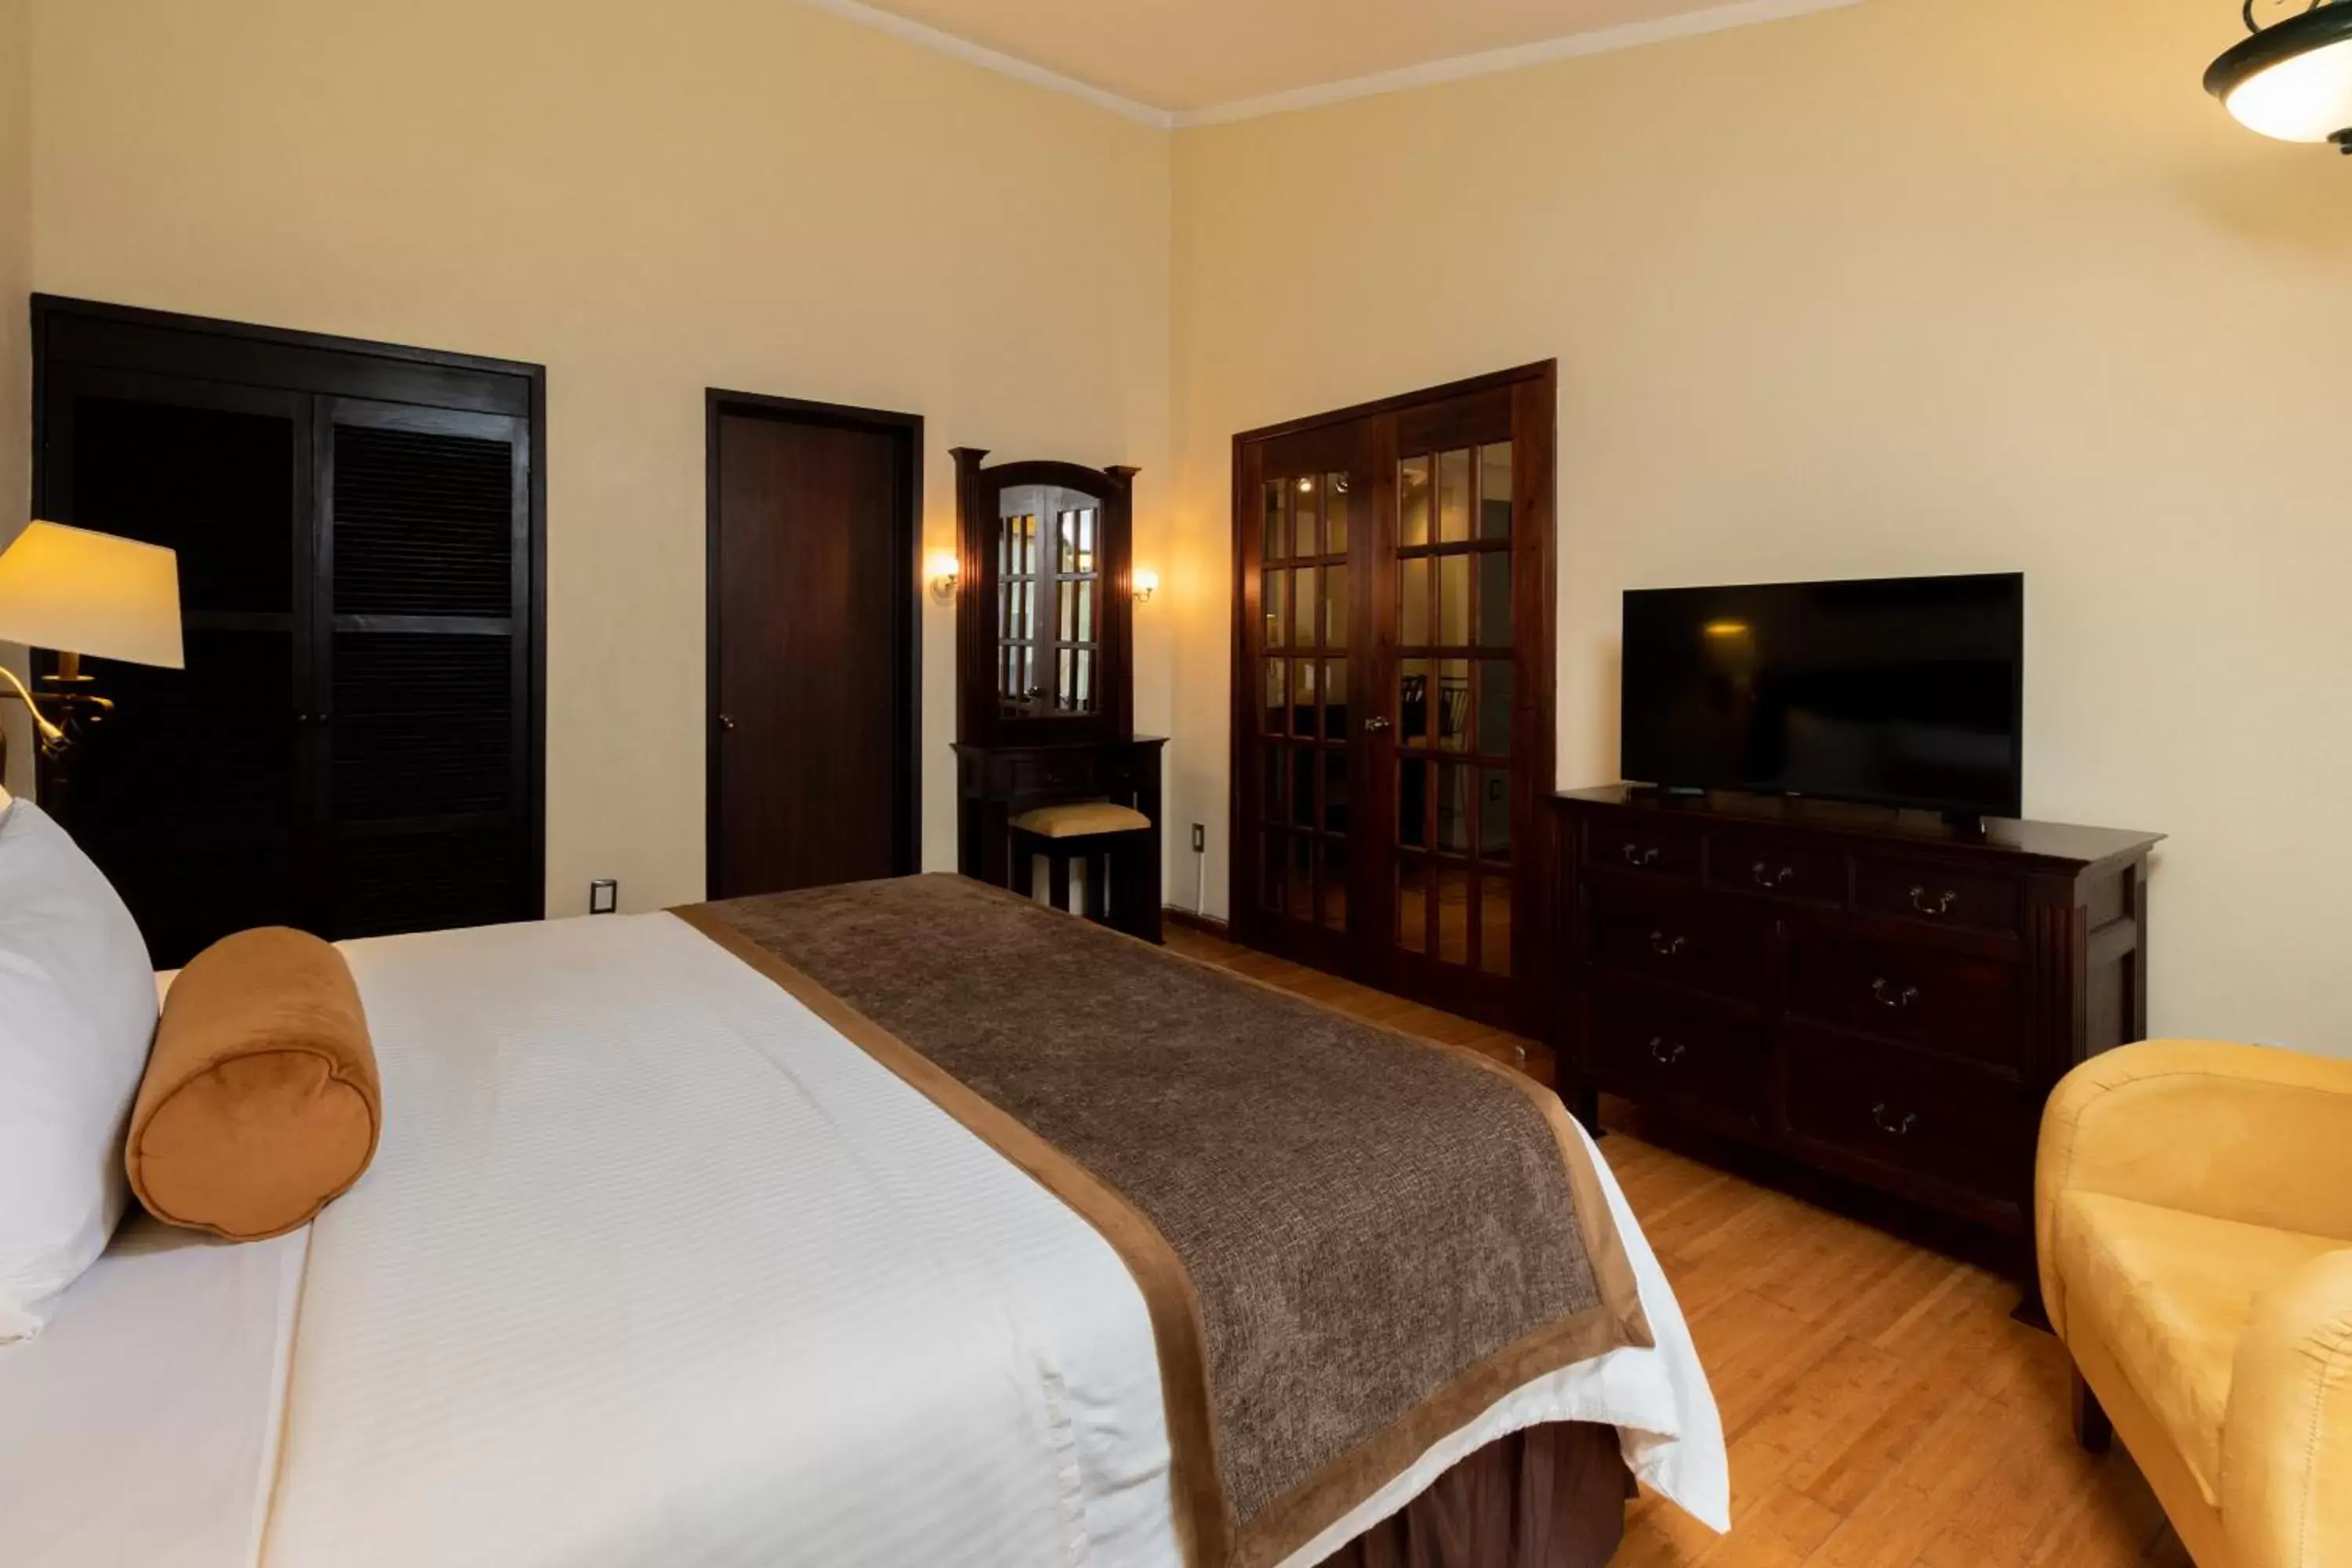 Bed in Hoteles Villa Mercedes San Cristobal